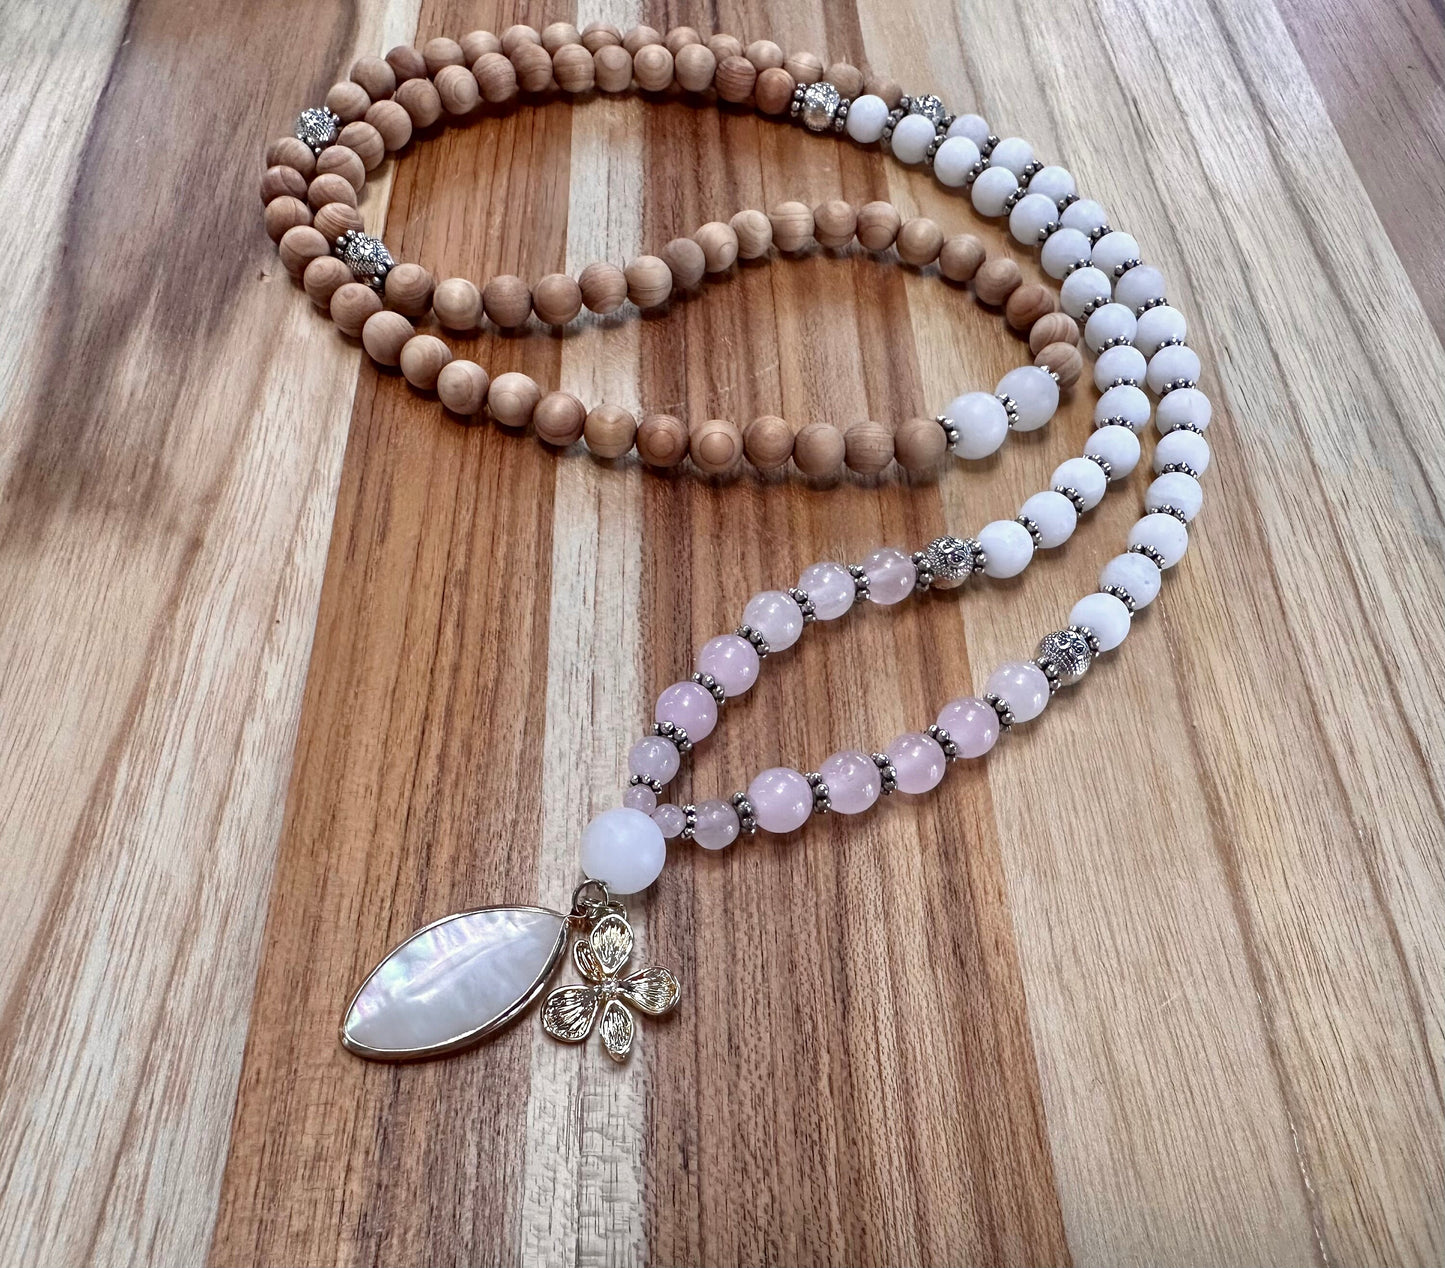 Gemstone Natural healing 108 bead Mala mediation yoga necklace layered bracelet gift shower decor self care jewelry manifesting therapeutic